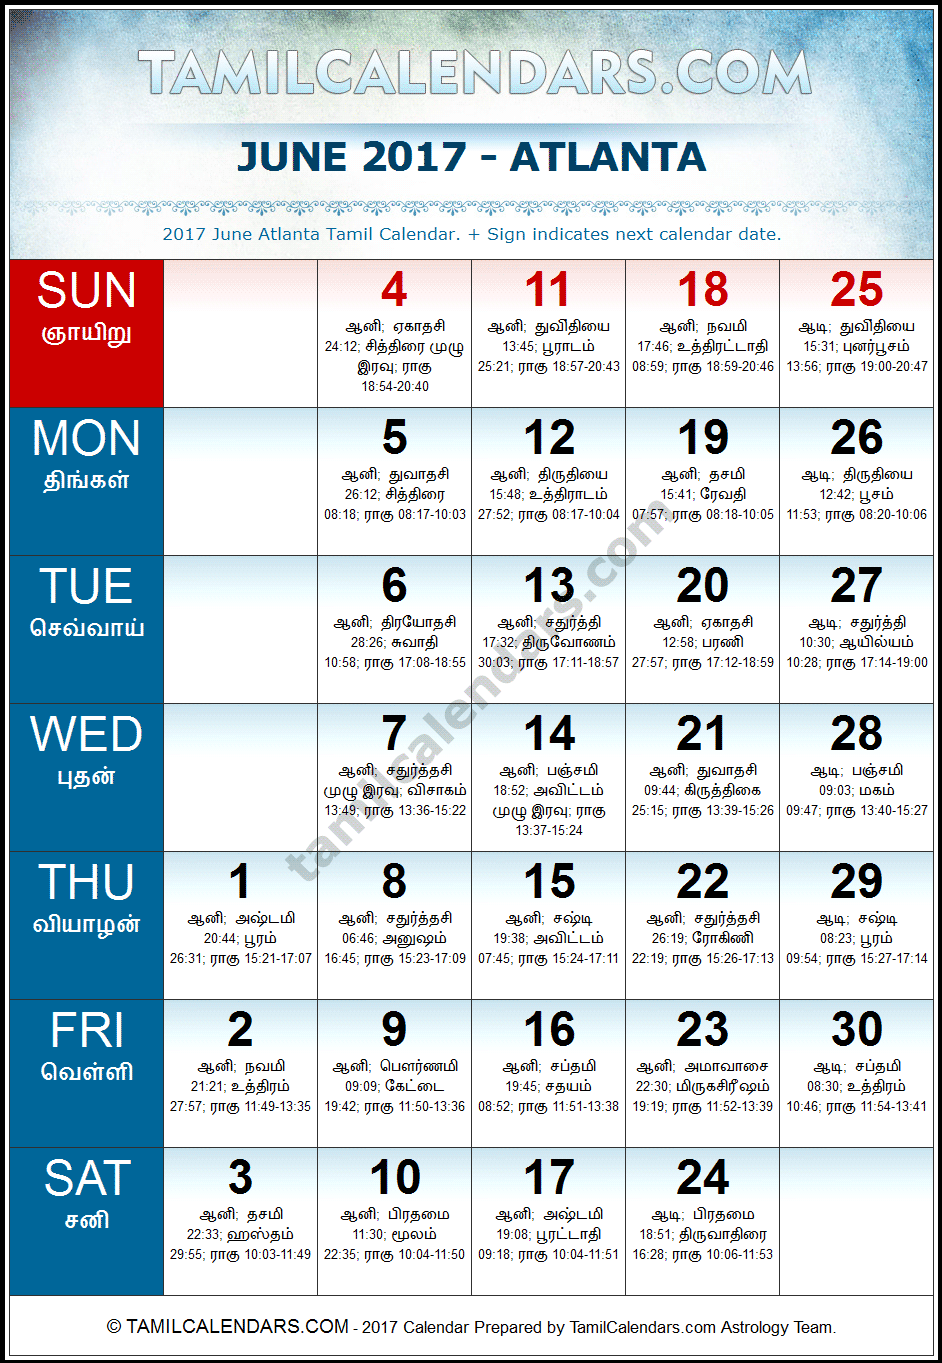 June 2017 Tamil Calendar for Atlanta, USA